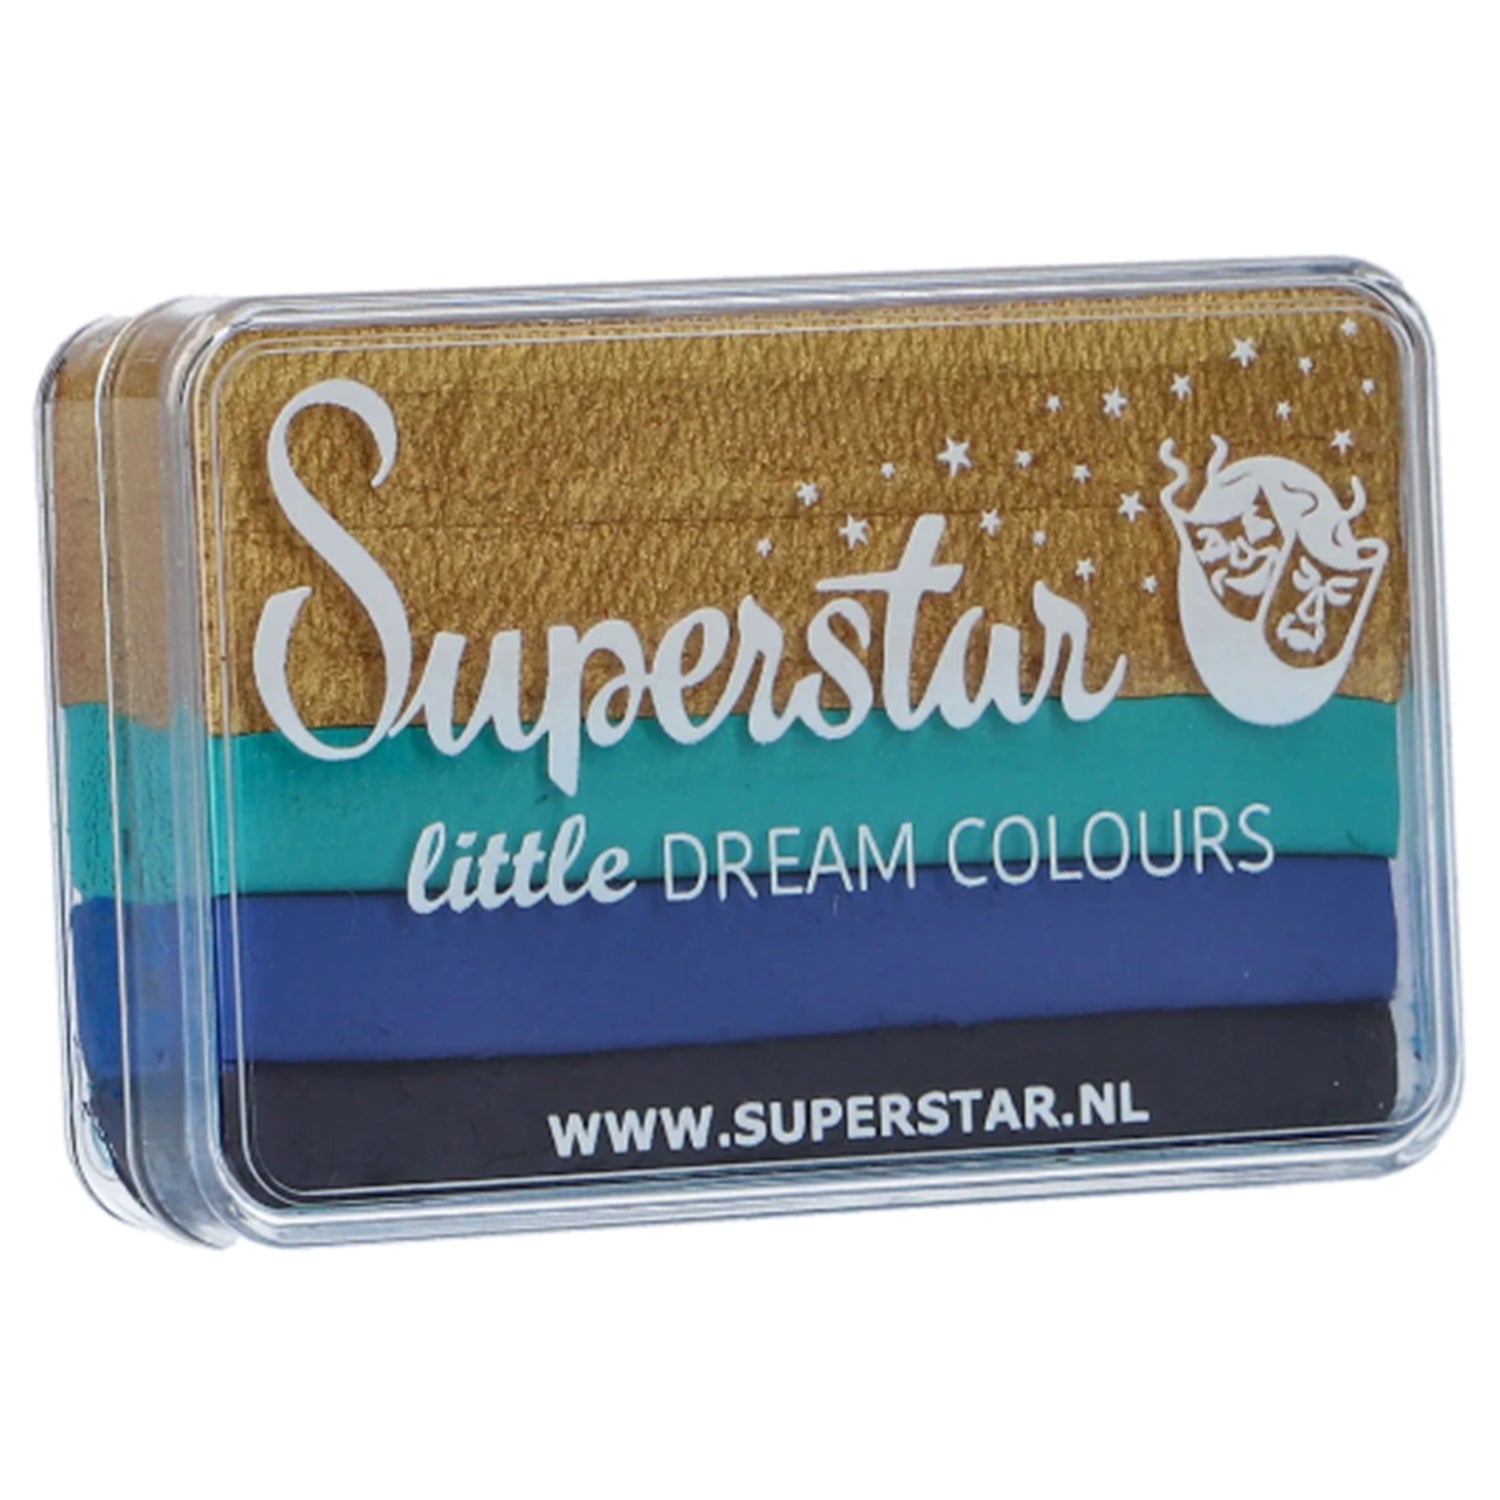 Superstar Dream Colours Rainbow Cake - Little Royal (1.06 oz/30 gm)